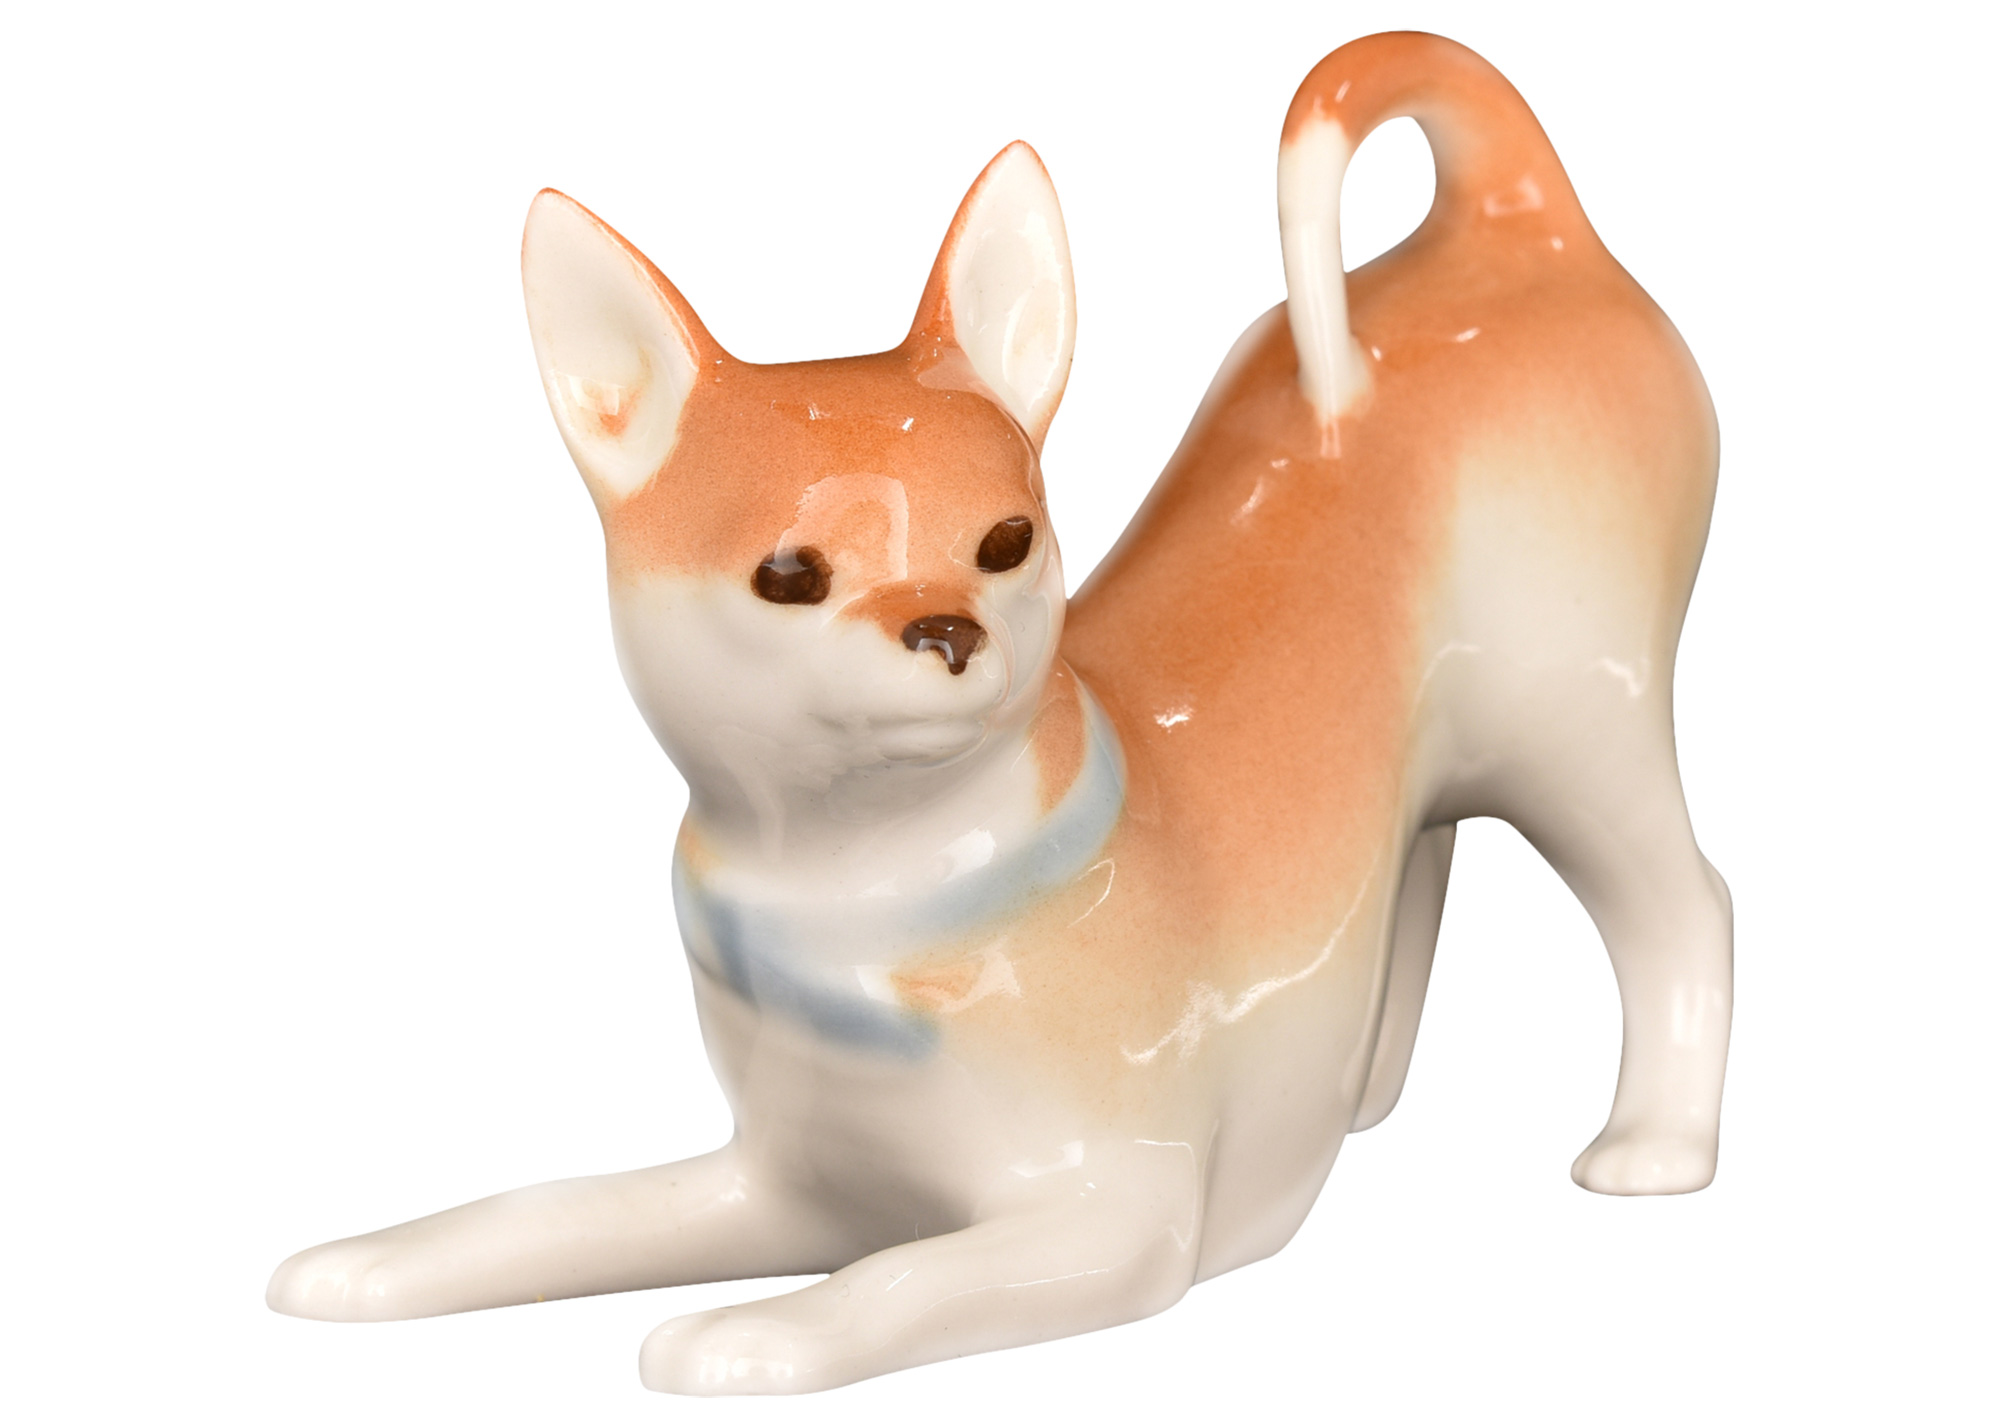 Buy Playing Chihuahua 'Chara' Dog Figurine 2.1"x3.1" at GoldenCockerel.com